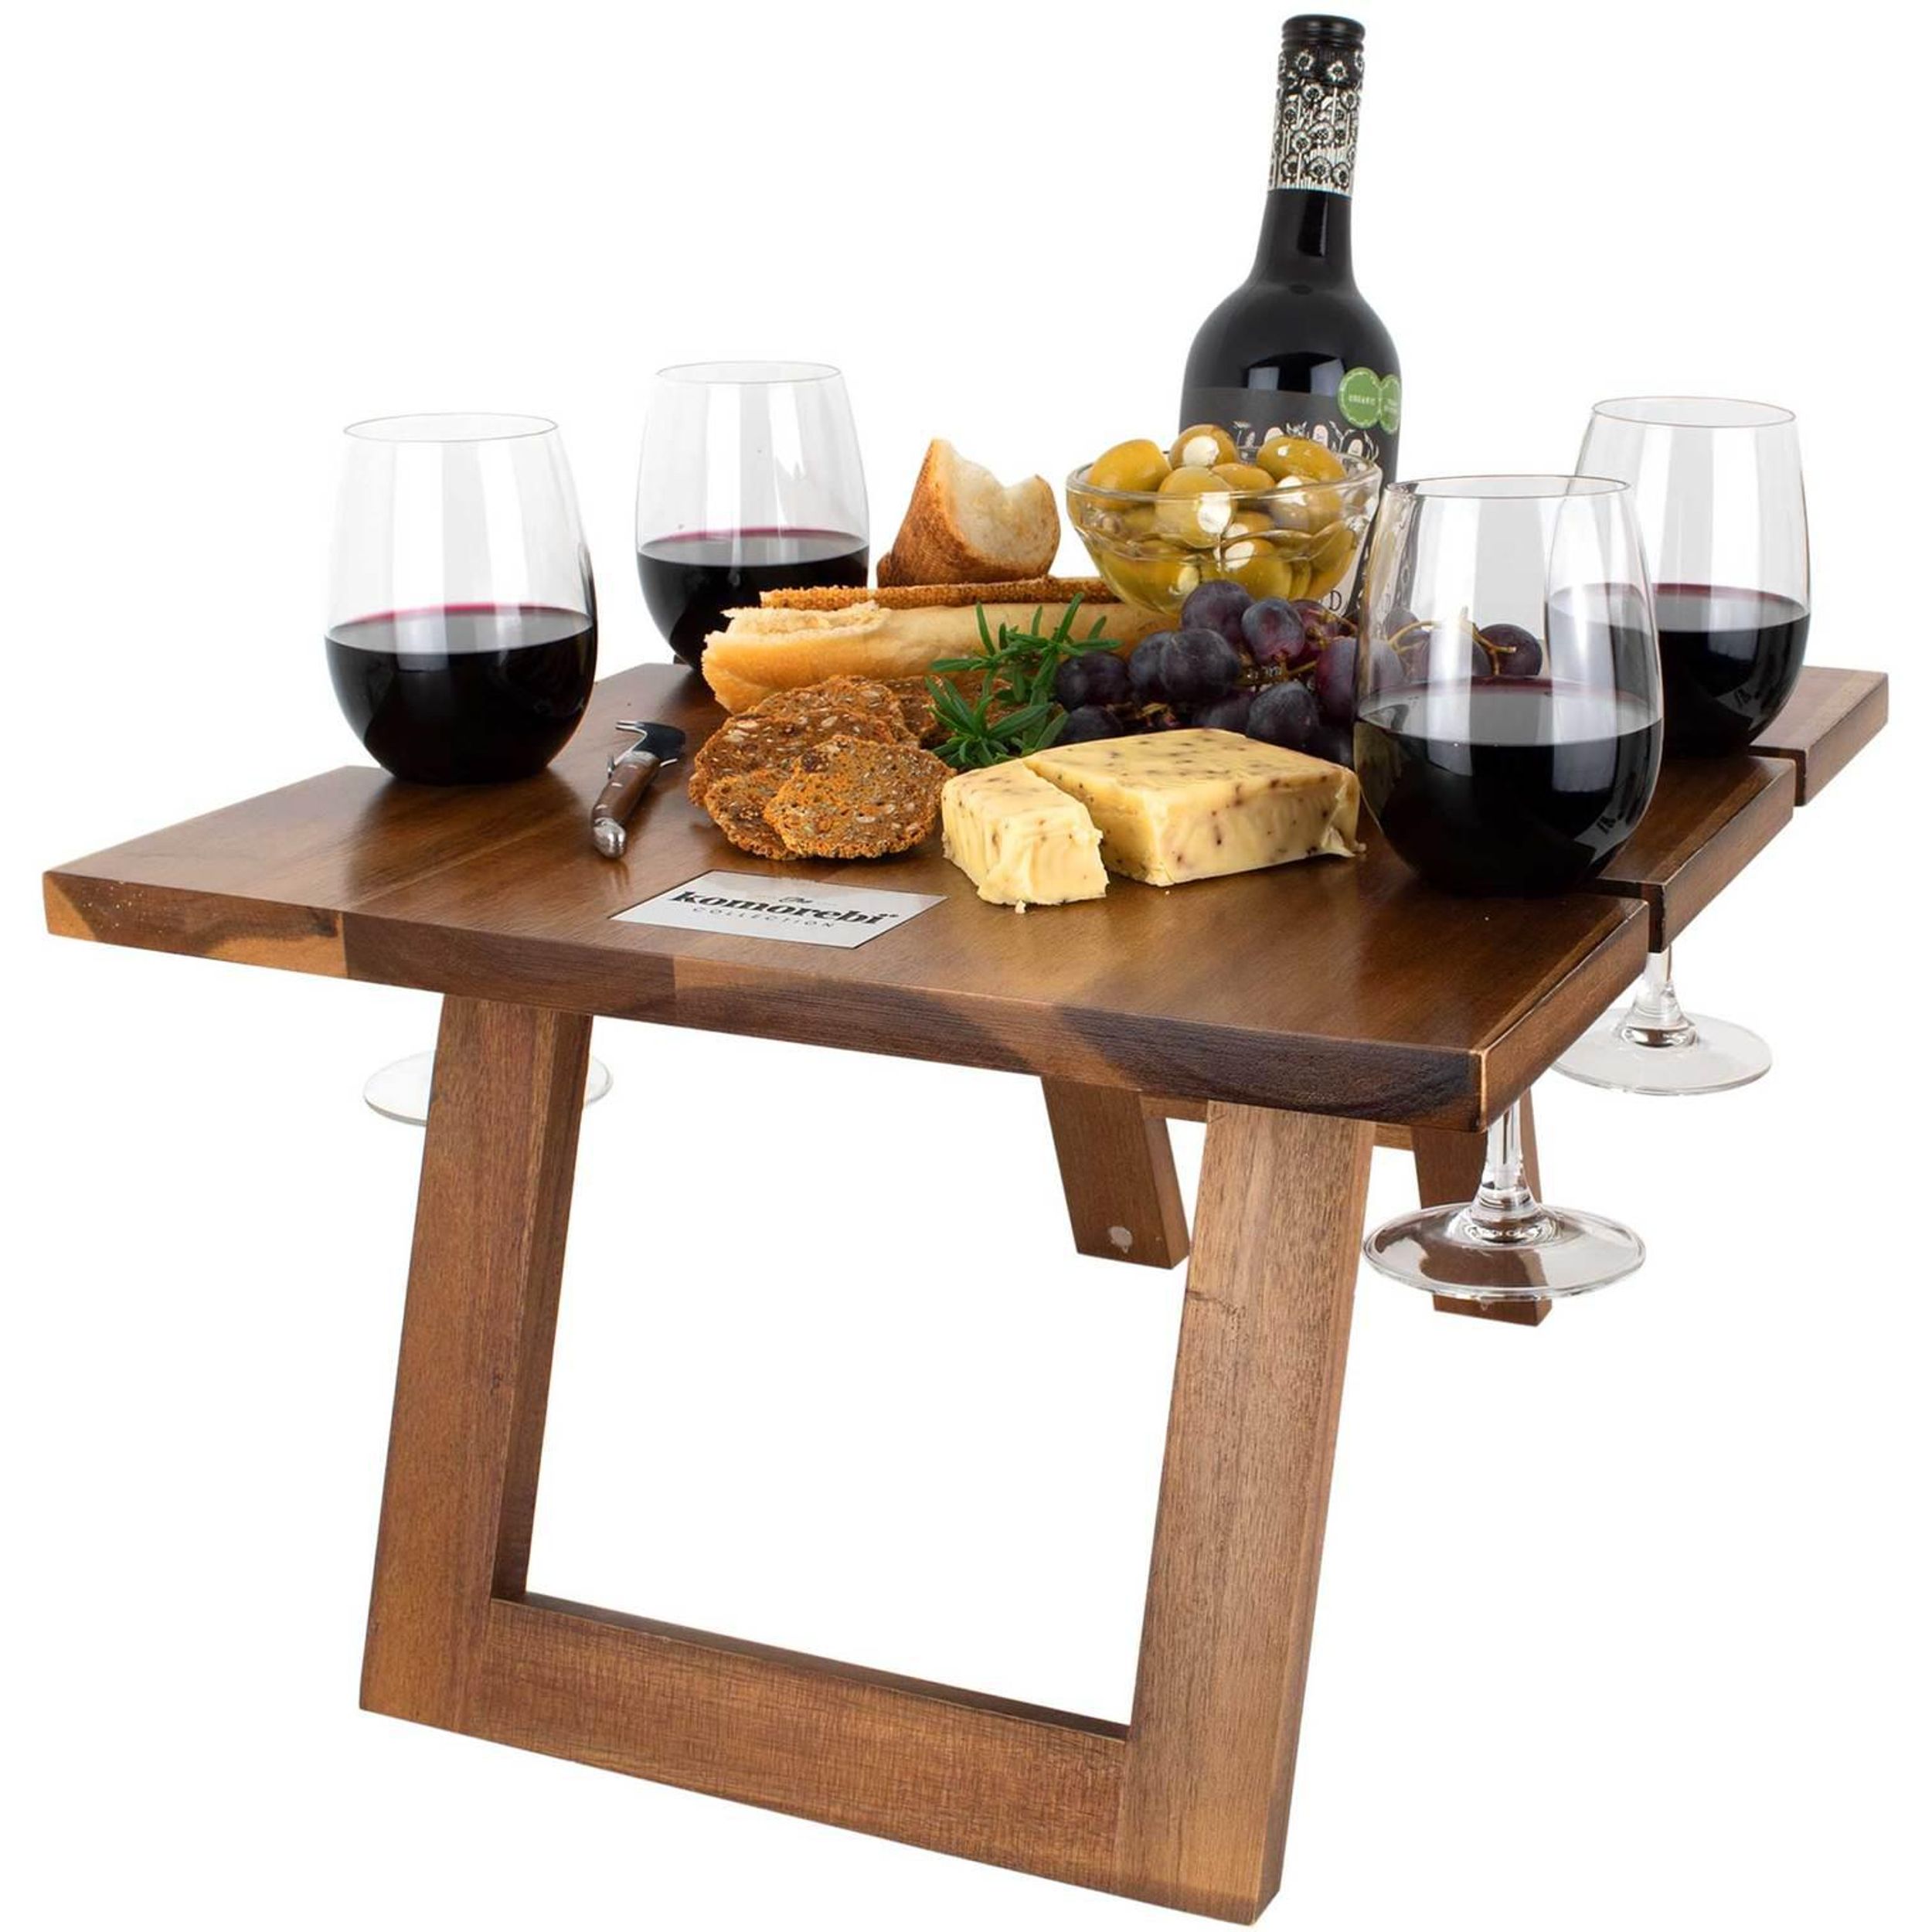 komorebi portable folding picnic table